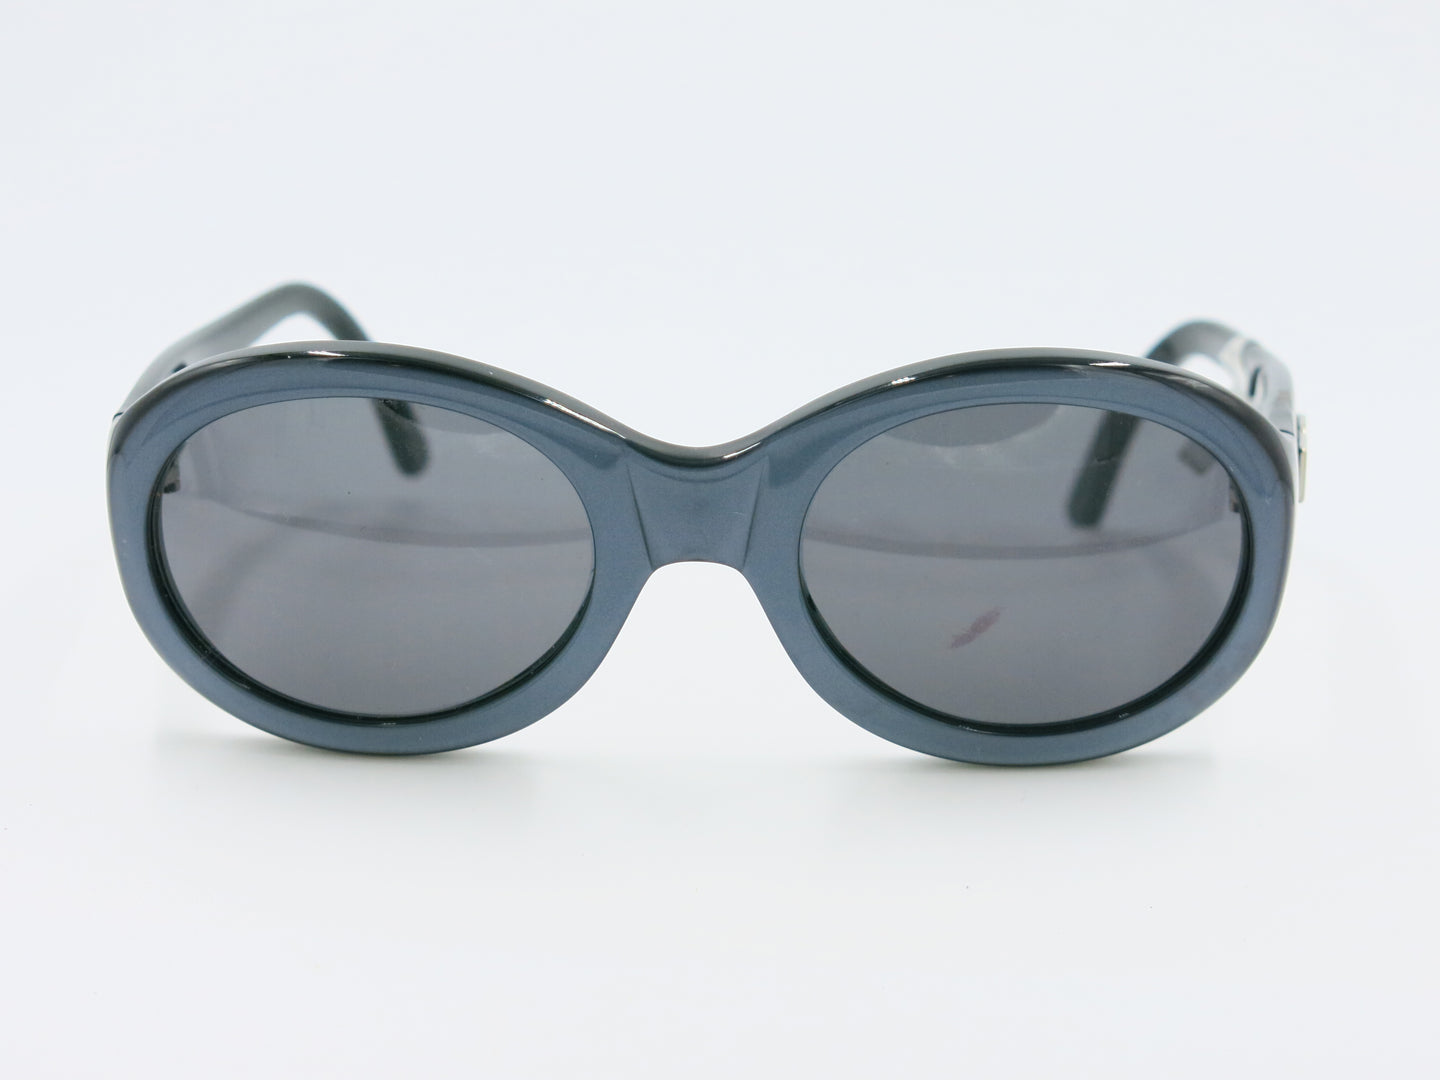 Dolce & Gabbana Sunglasses DG 523 S | Sunglasses by Dolce & Gabbana | Friedman & Sons